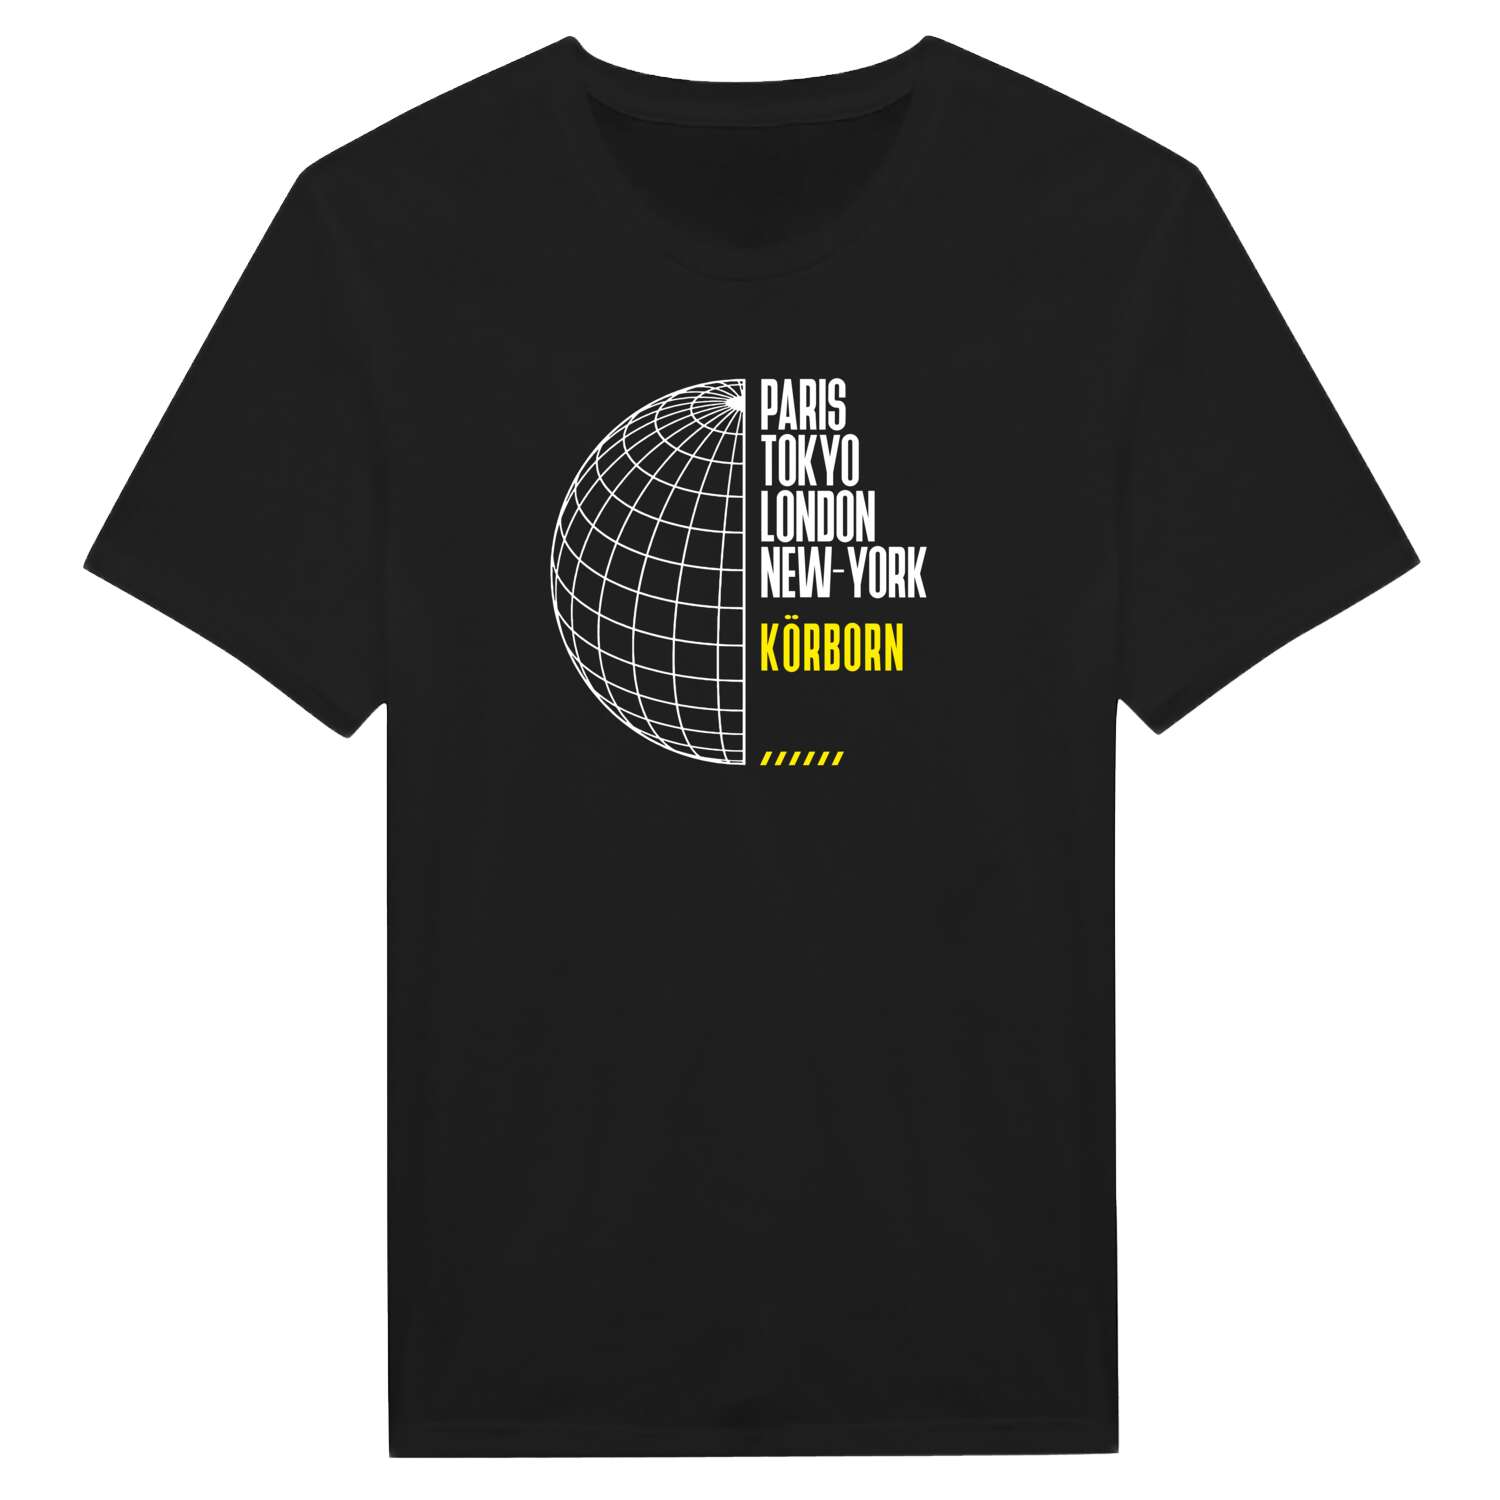 Körborn T-Shirt »Paris Tokyo London«